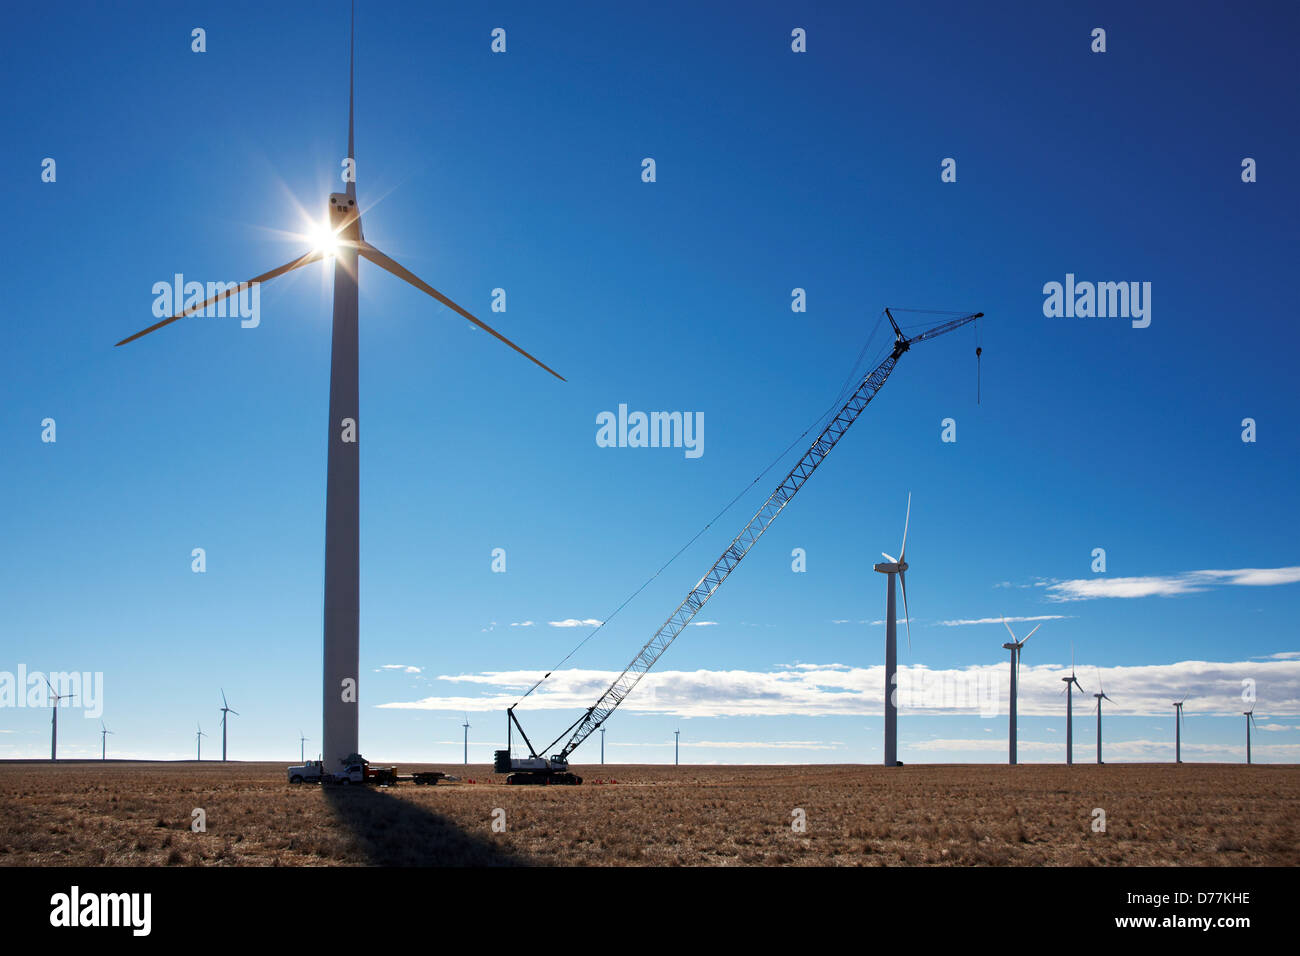 Stati Uniti Colorado Pawnee prateria nazionale della turbina eolica gru di manutenzione Foto Stock